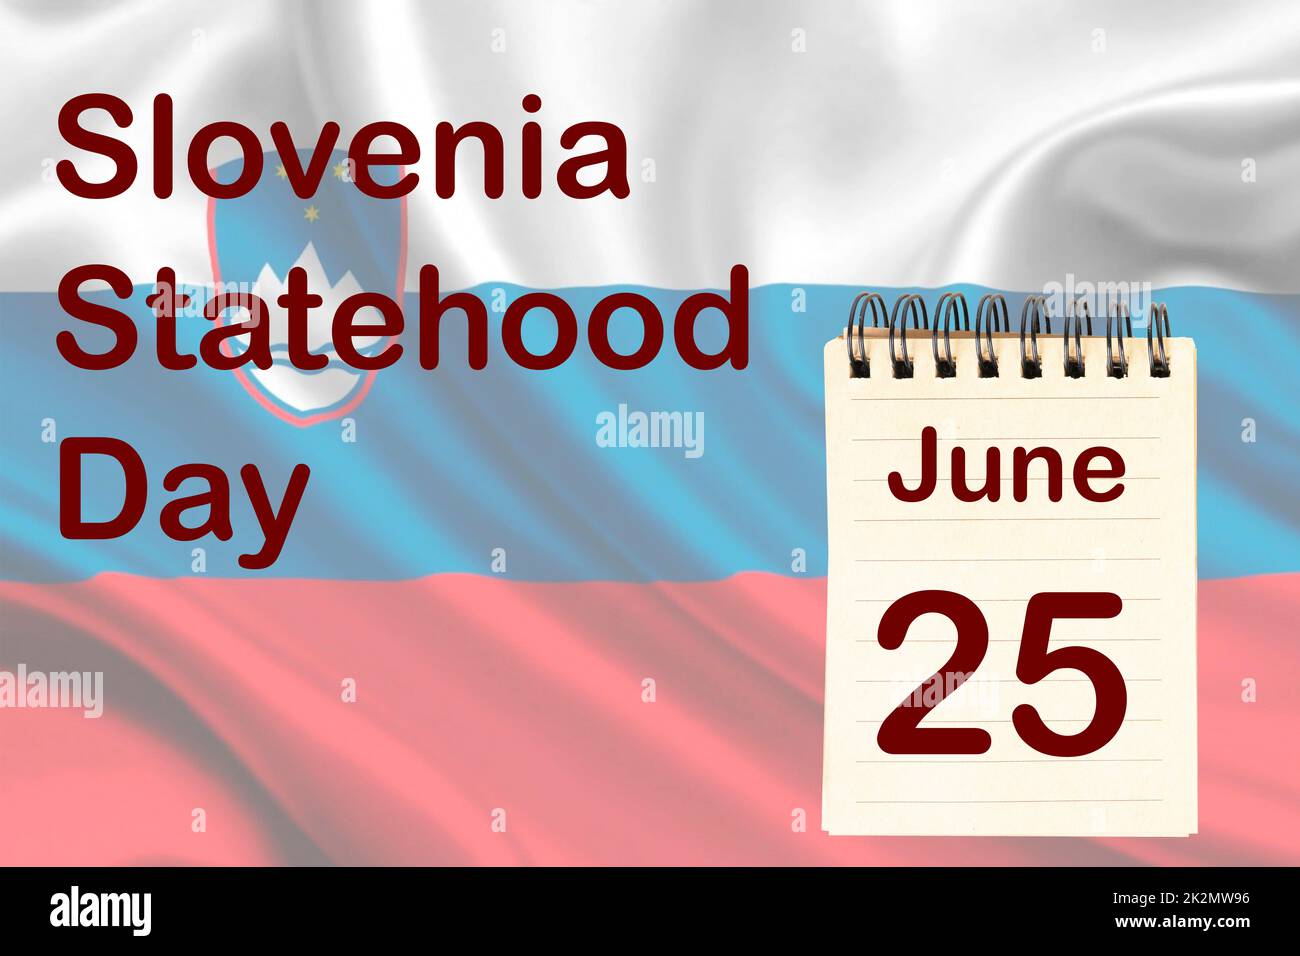 Slovenia Statehood Day Stock Photo